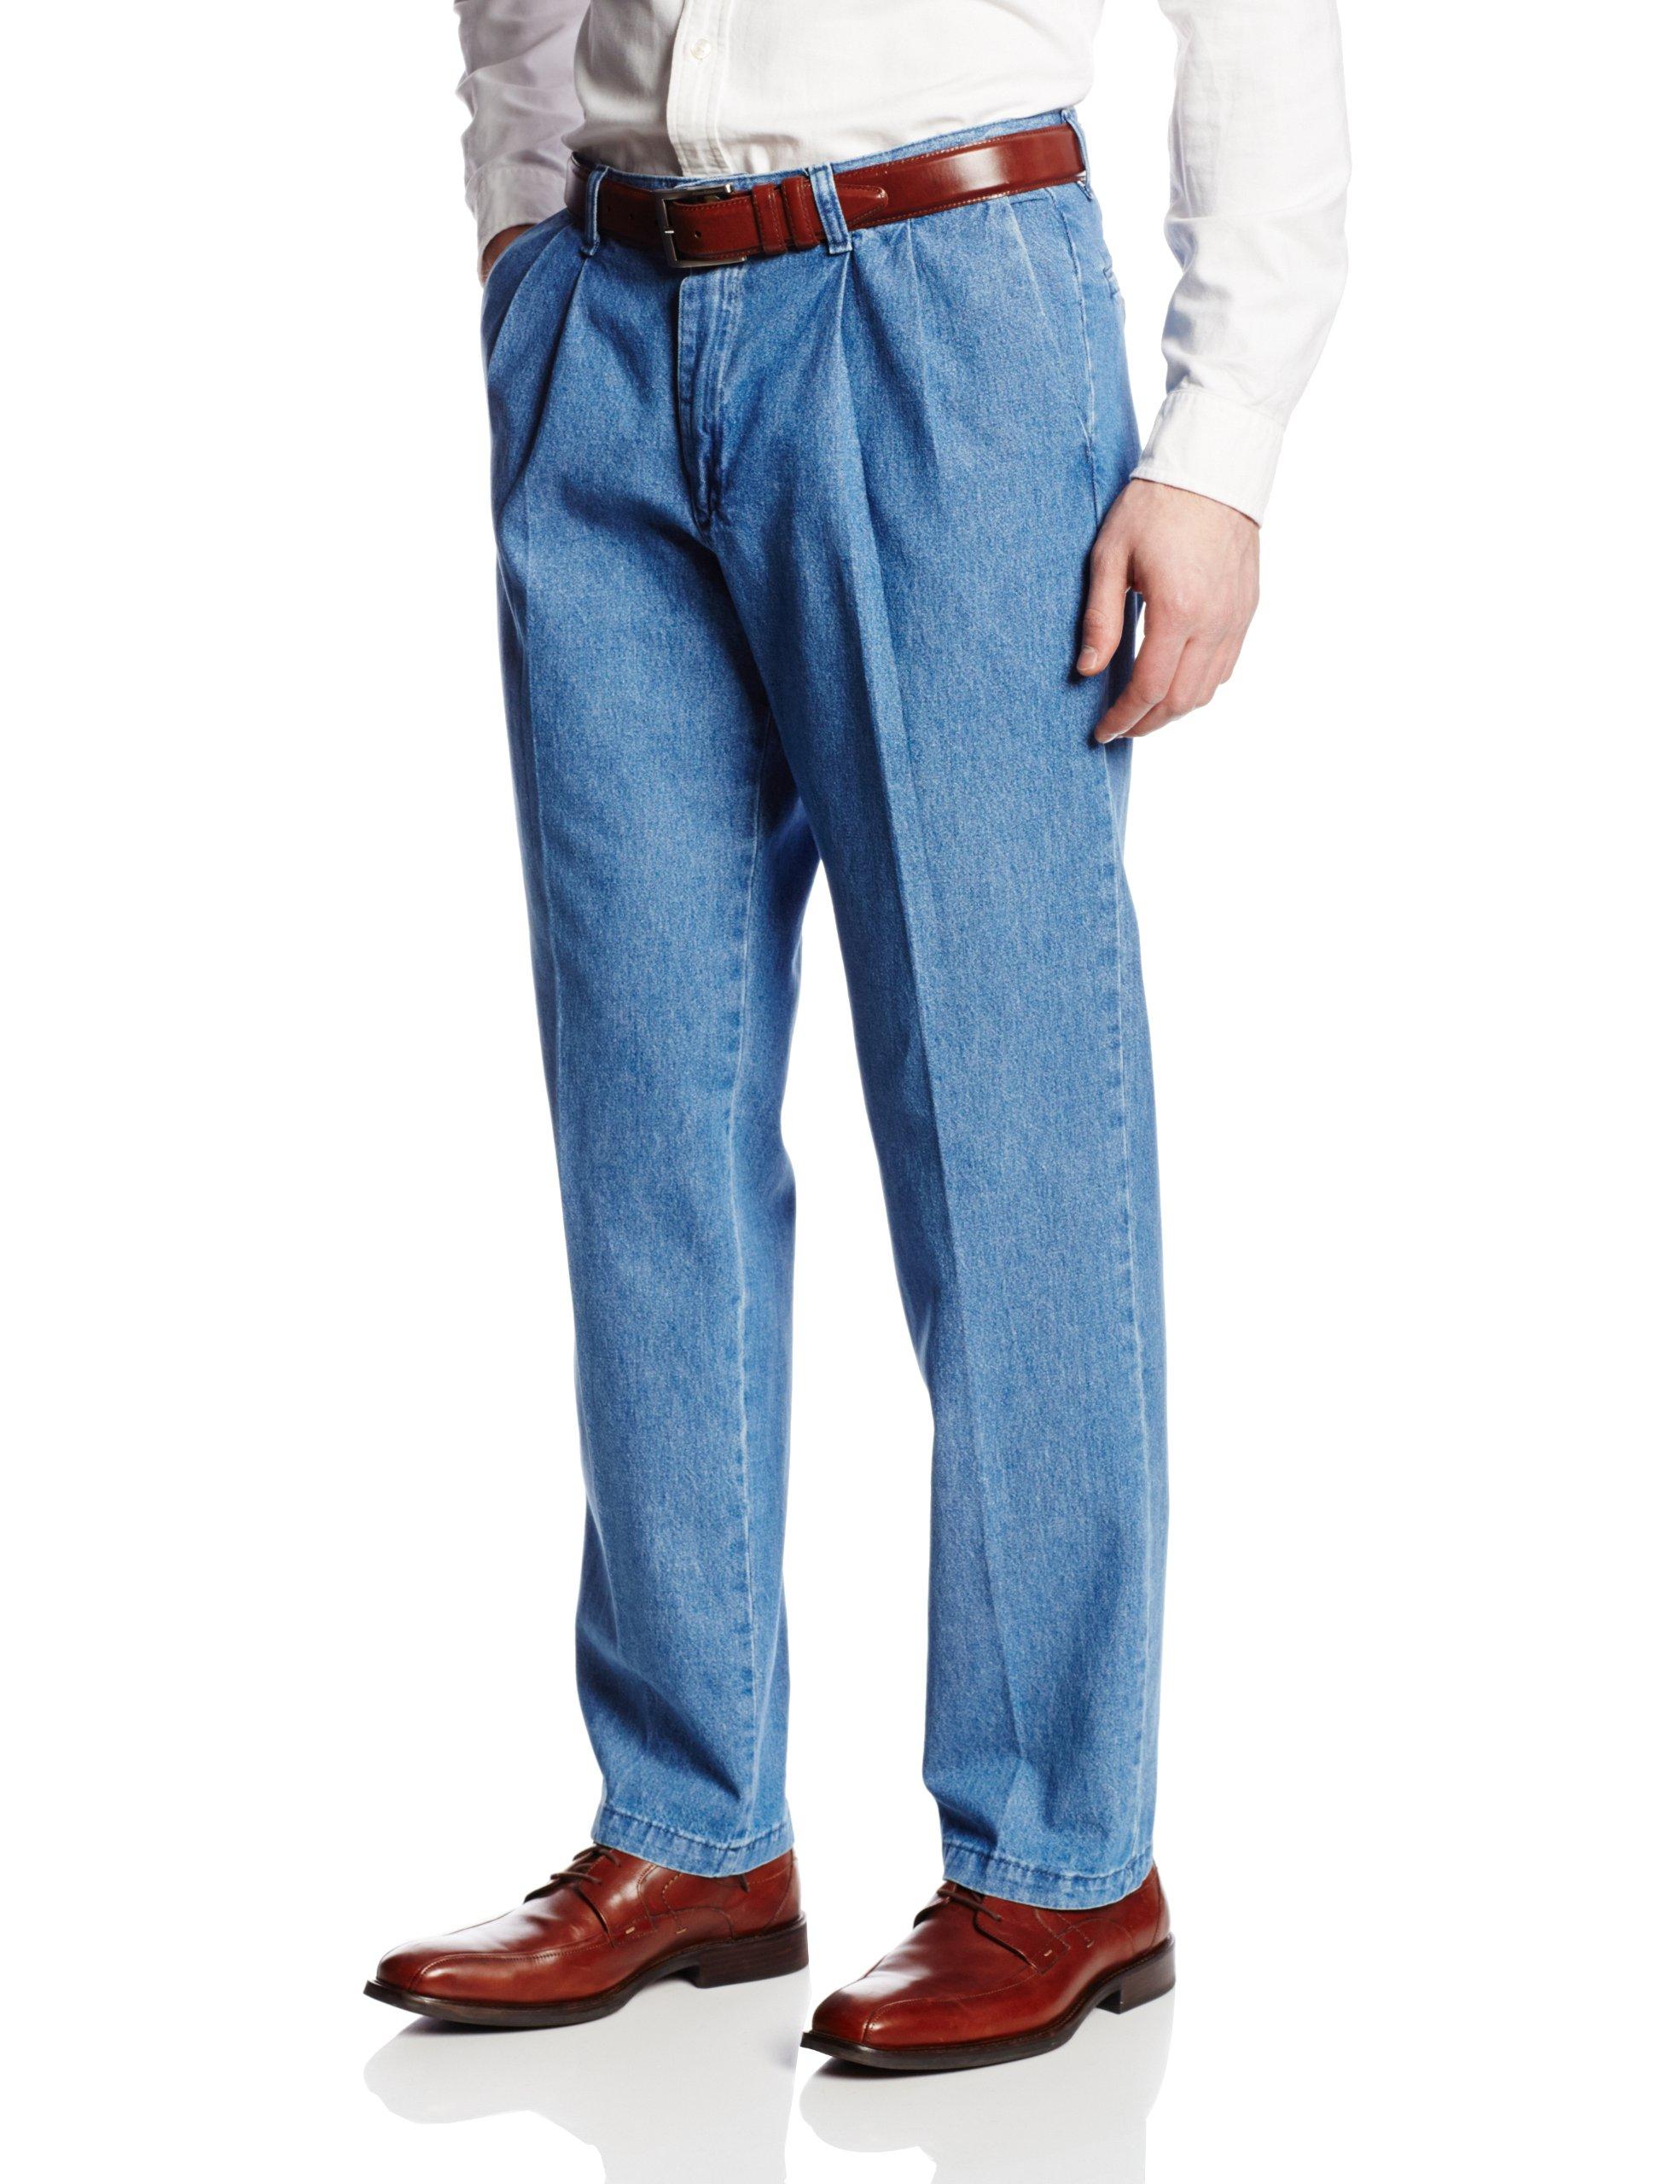 Orvis Jeans Mens Size 40x28 High Rise Straight Leg Blue Denim Pants Classic  | eBay